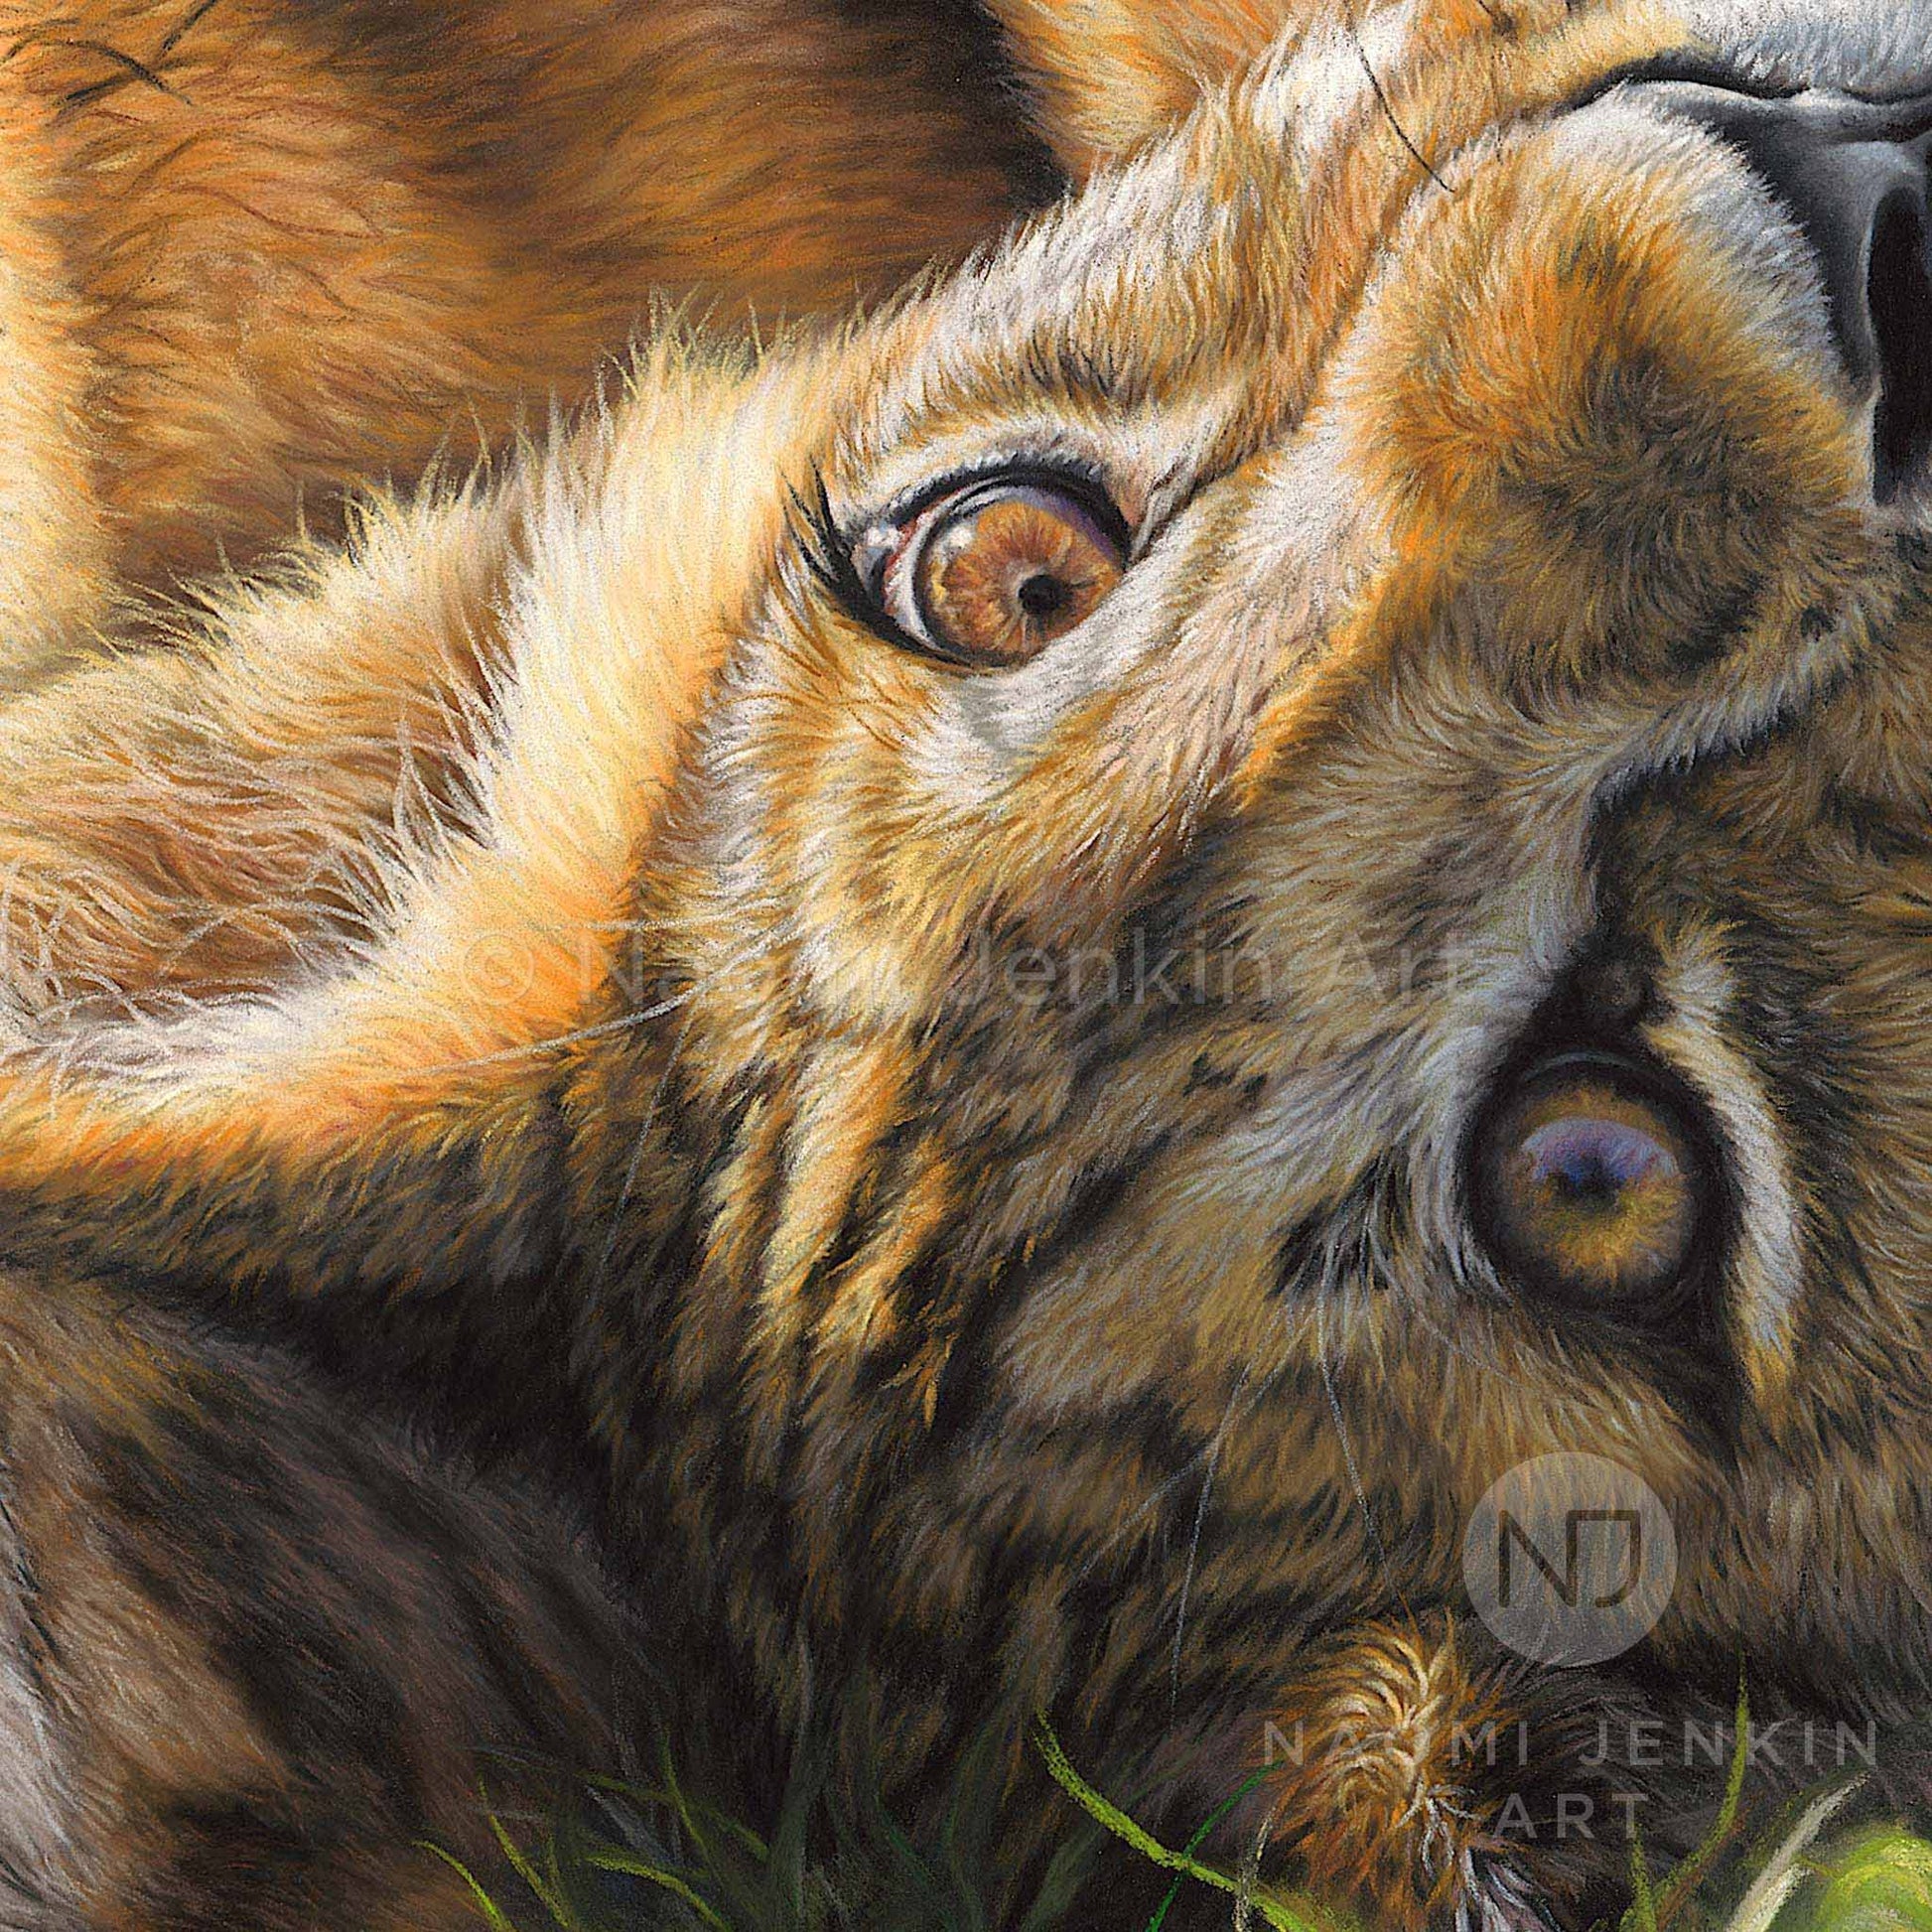 Playful art print of two lion cubs by wildlife artist Naomi Jenkin